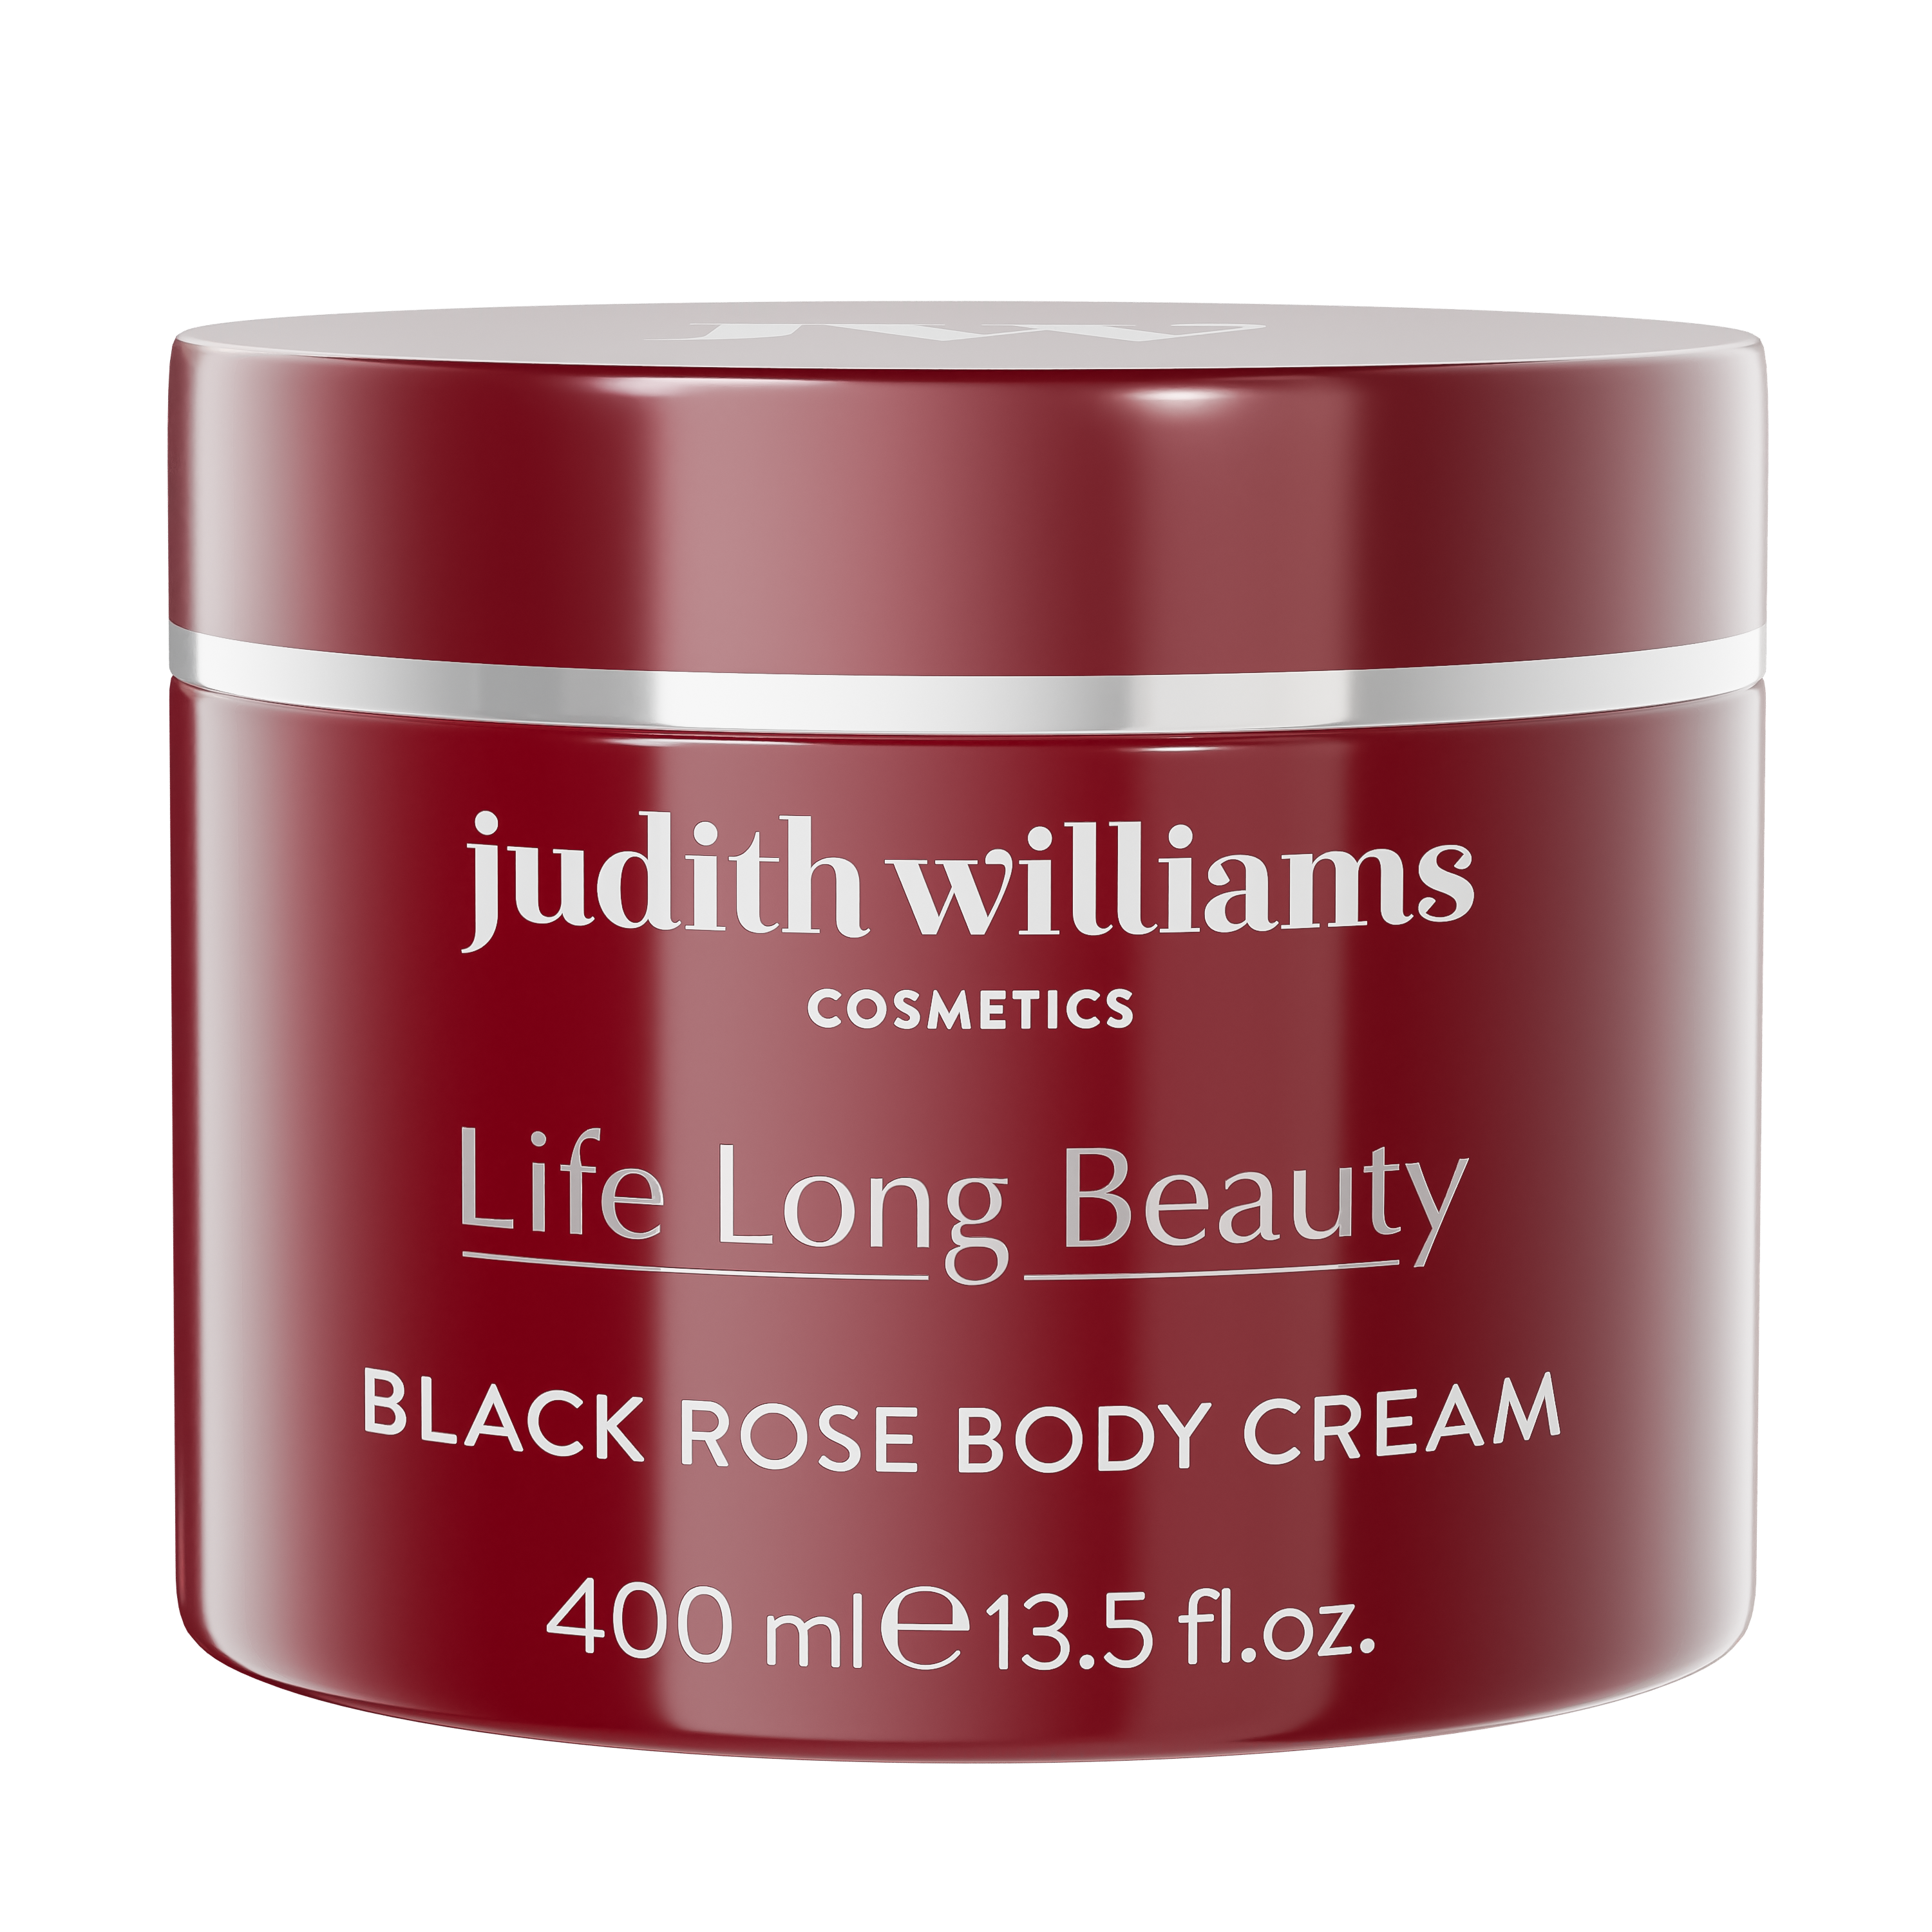 Life Long Beauty Black Rose Body Cream